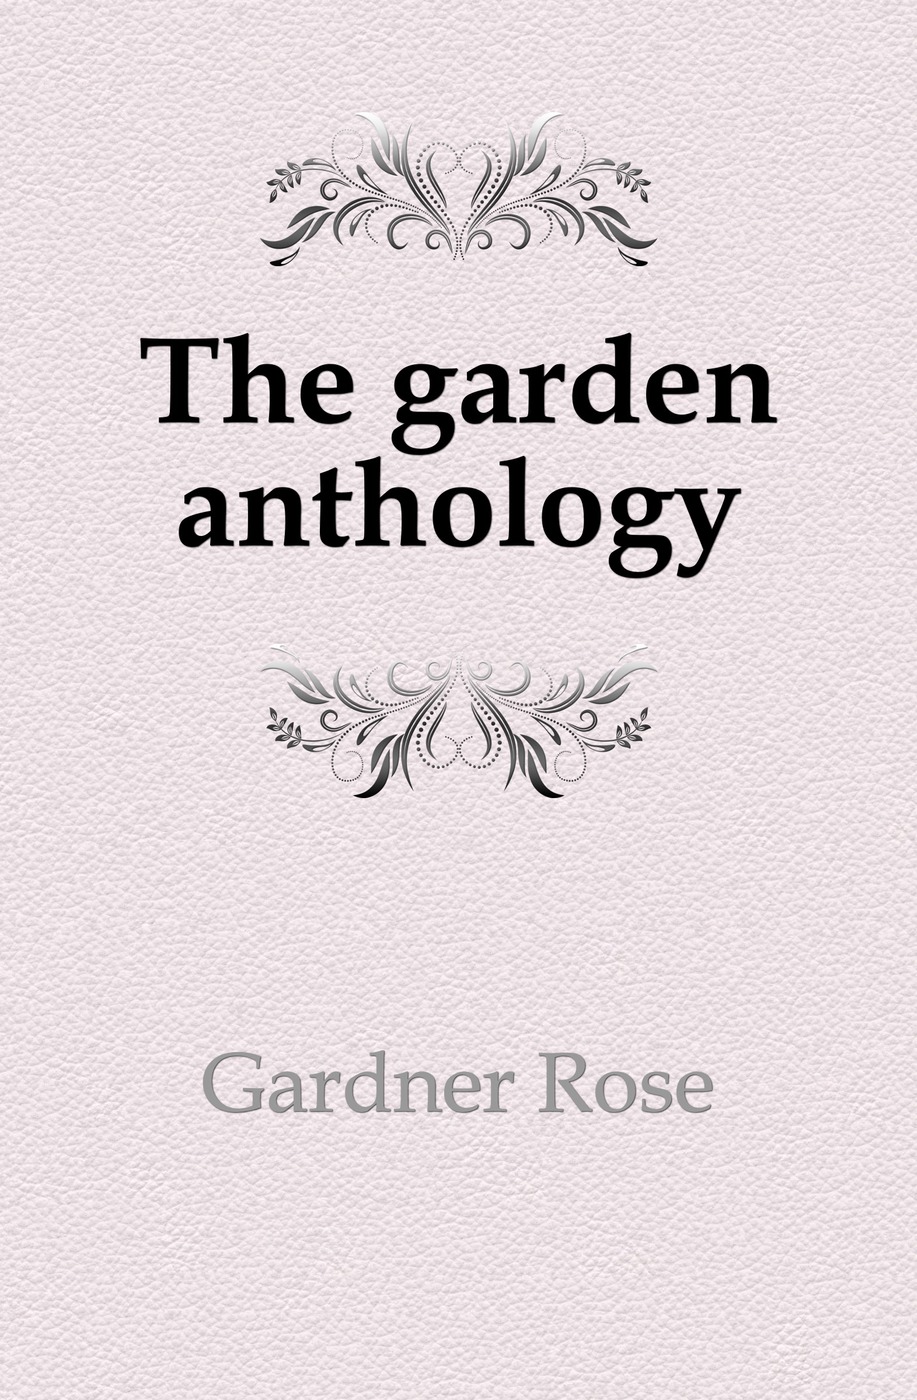 The garden anthology